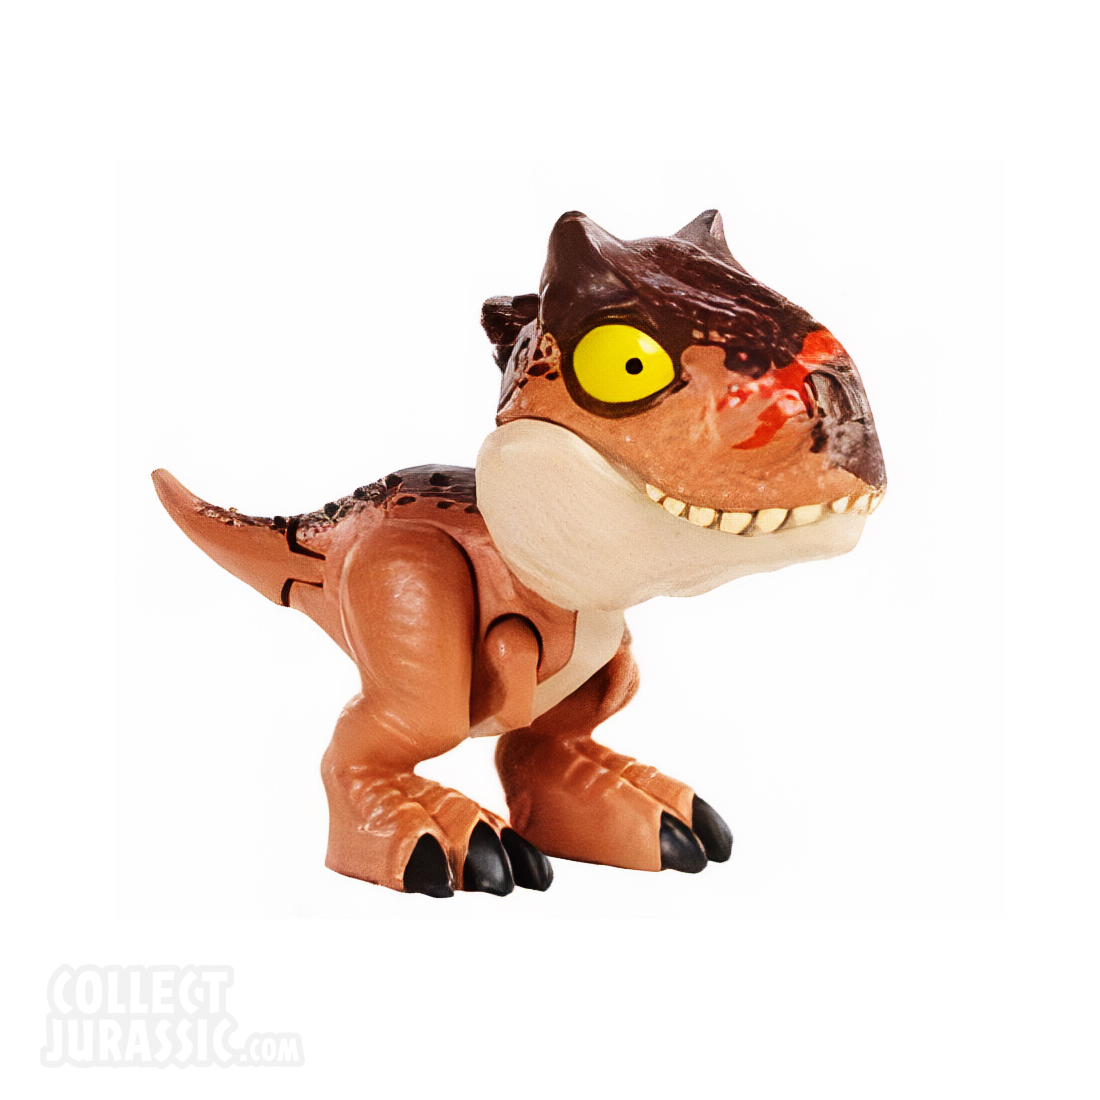 Jurassic World Camp Cretaceous Snap Squad Spinosaurus 2021 Mattel Hbx46 Gkx72 for sale online